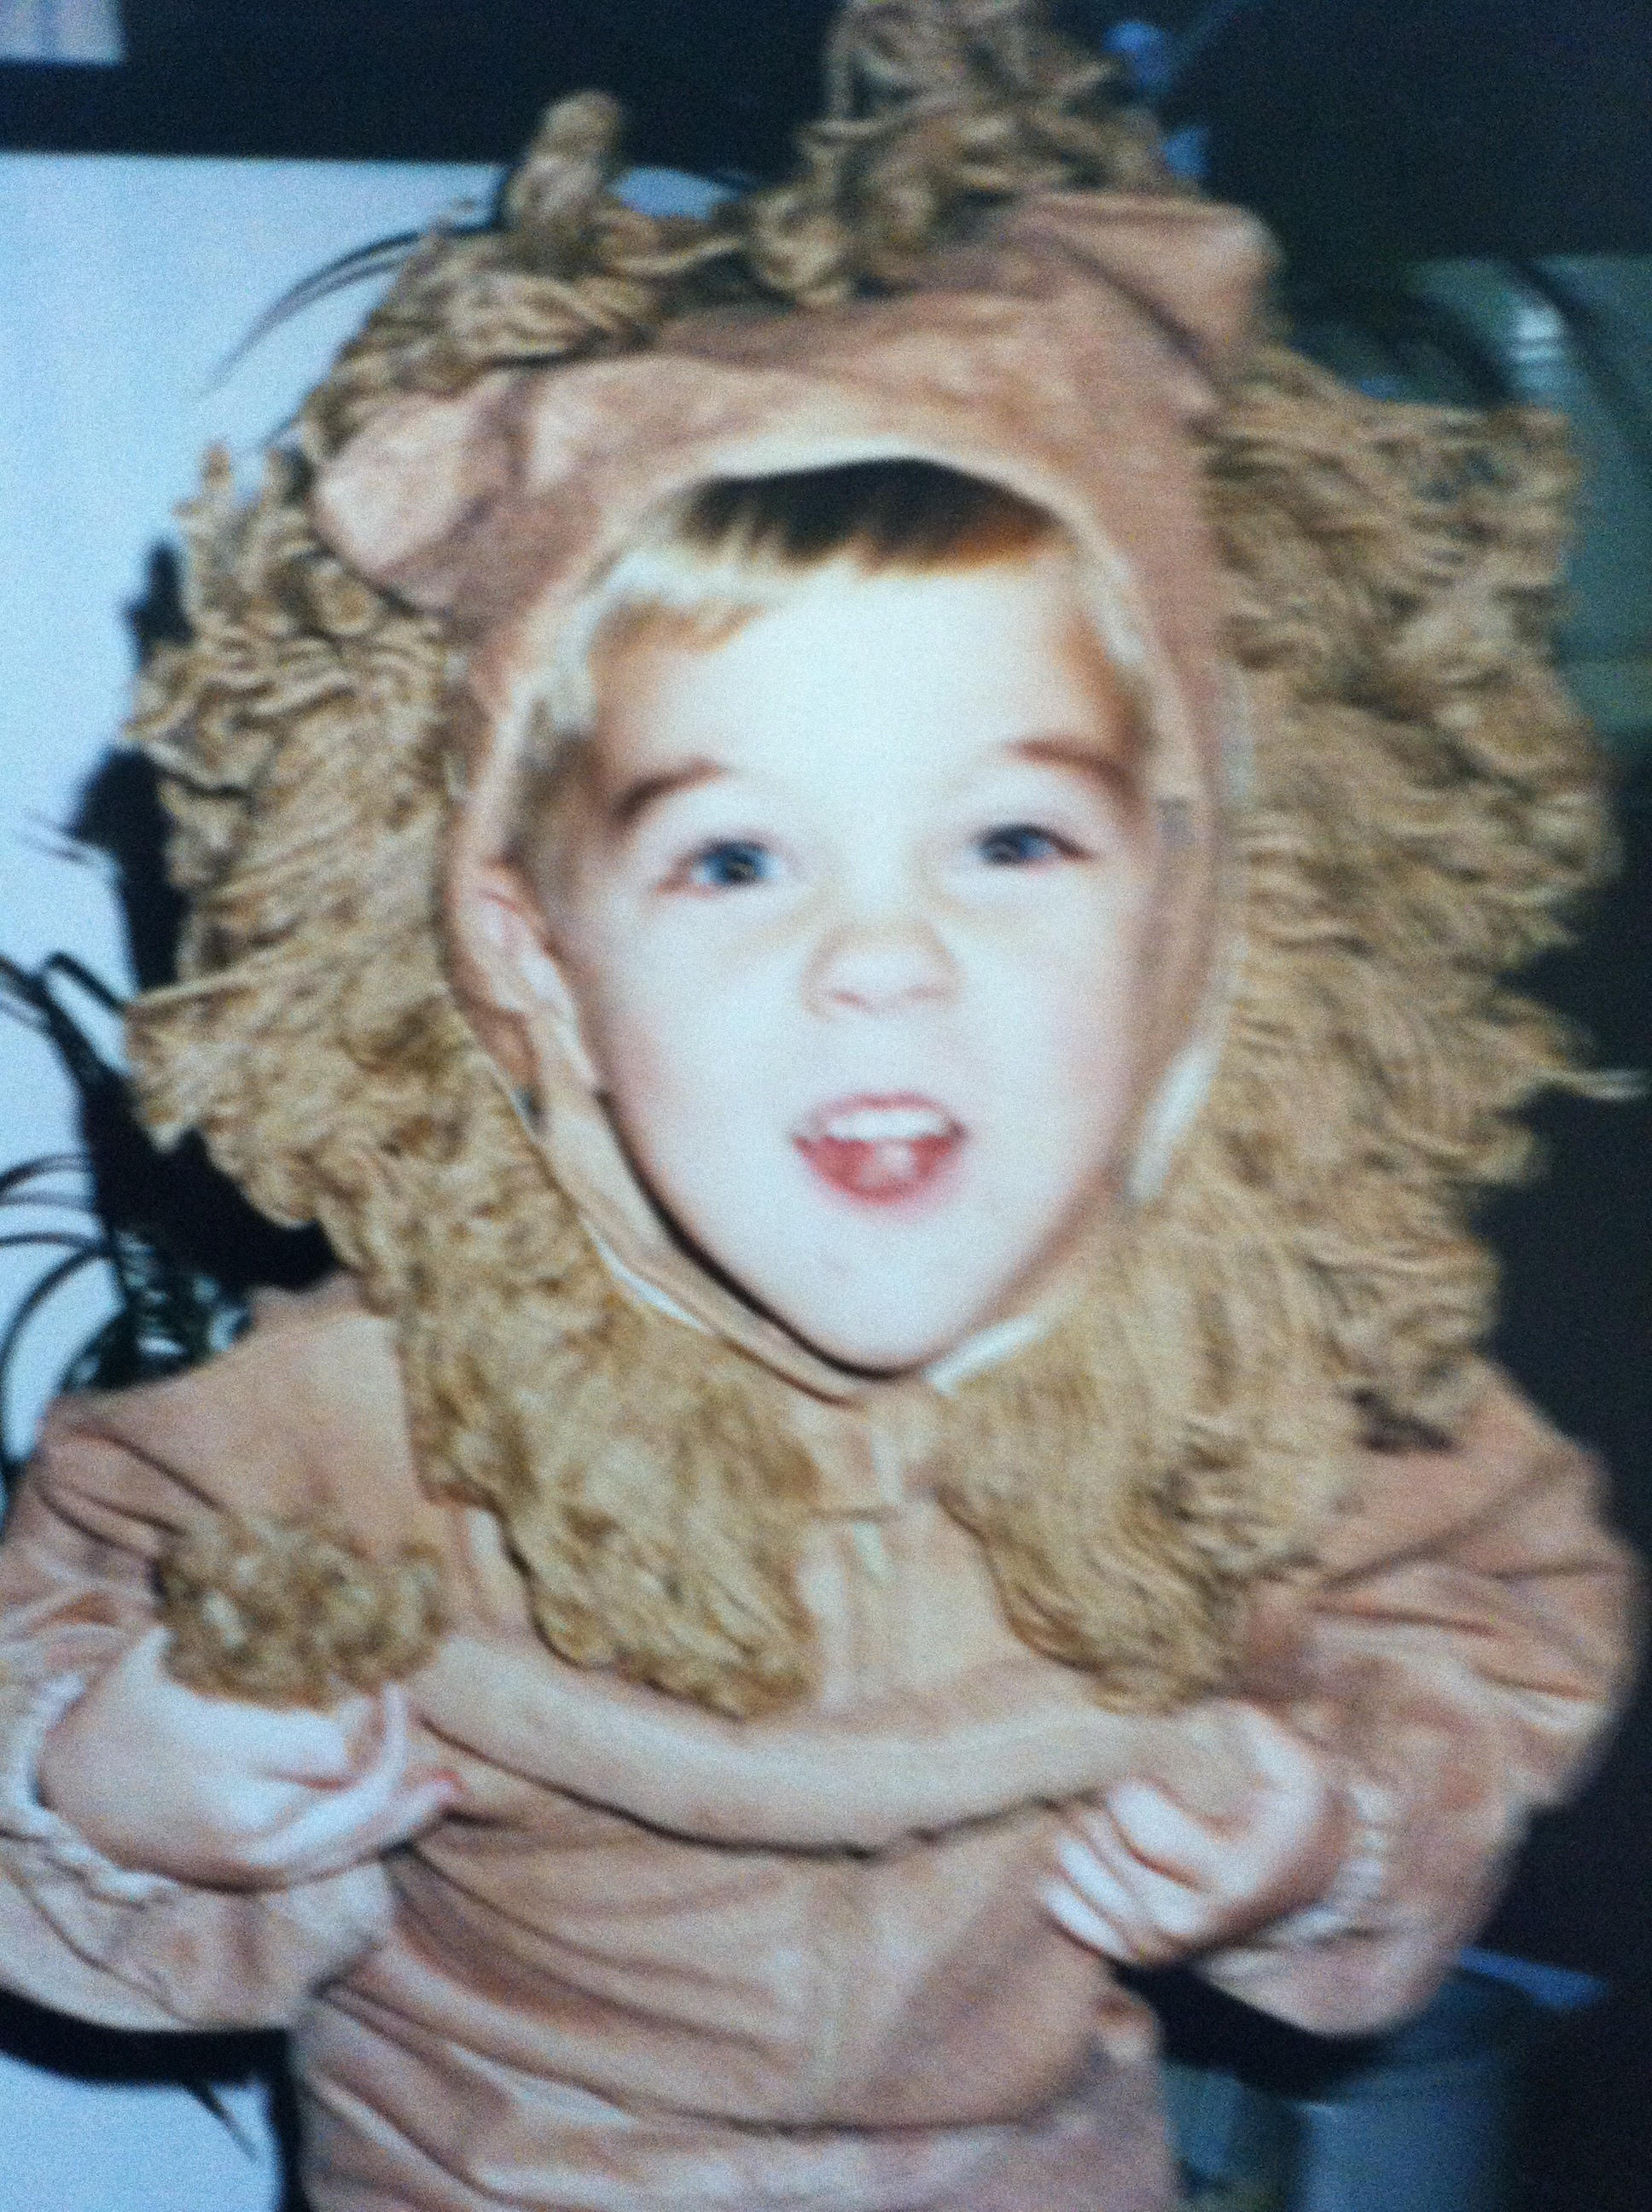 Young Chris Garten in lion costume